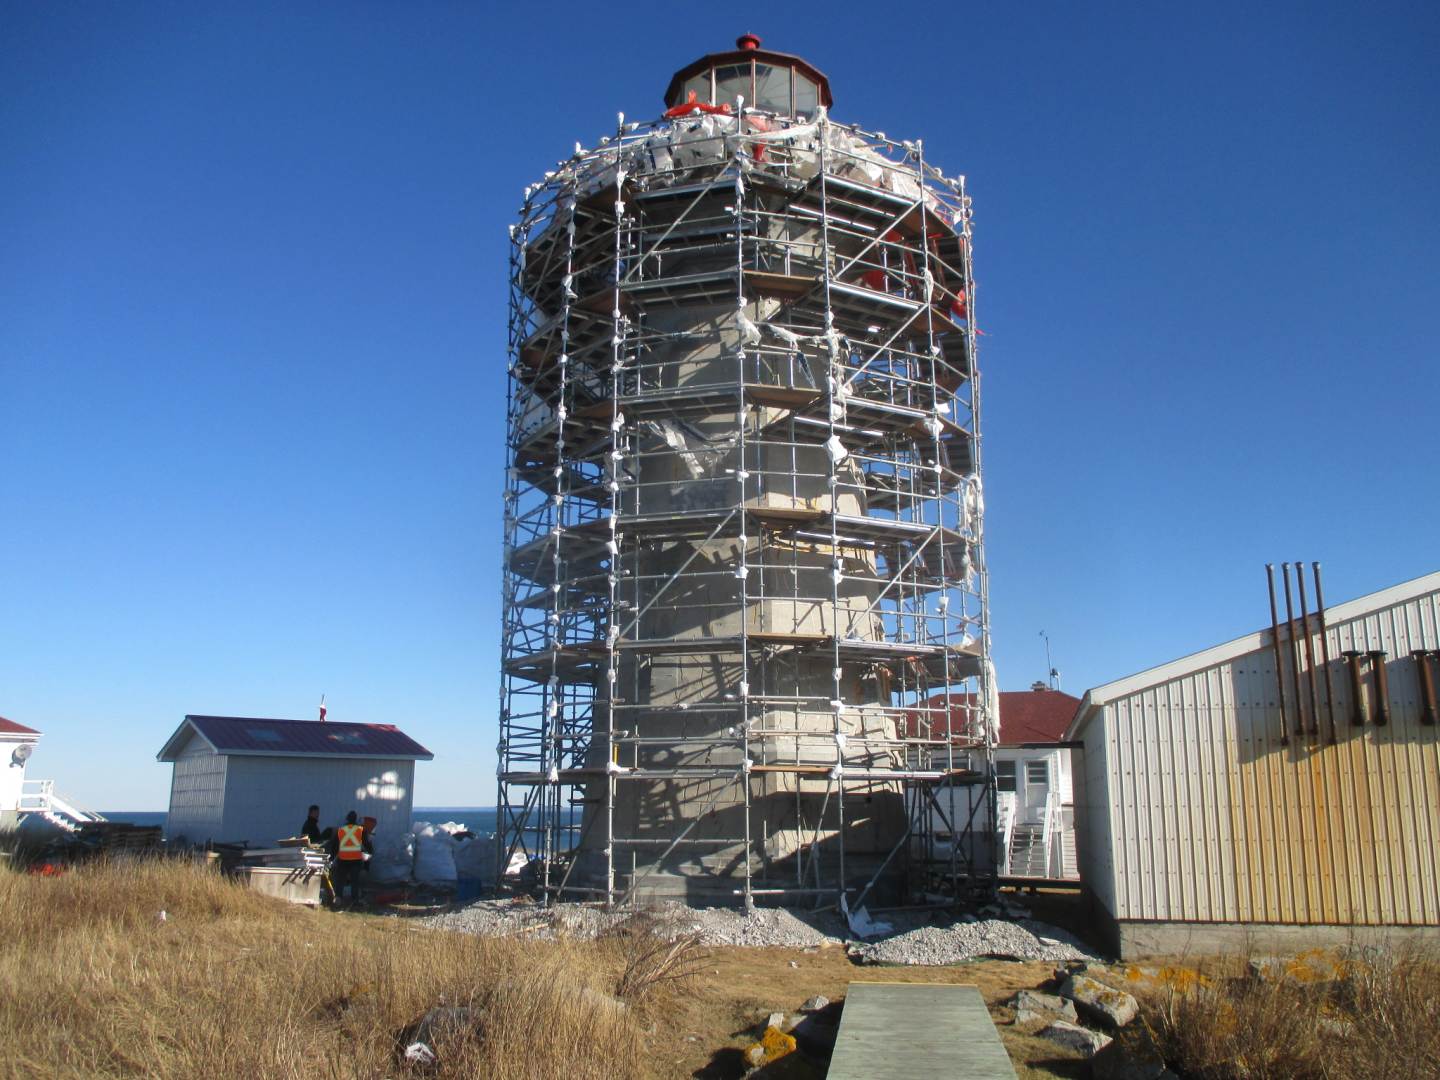 Machias Seal Island Lighthouse Restoration